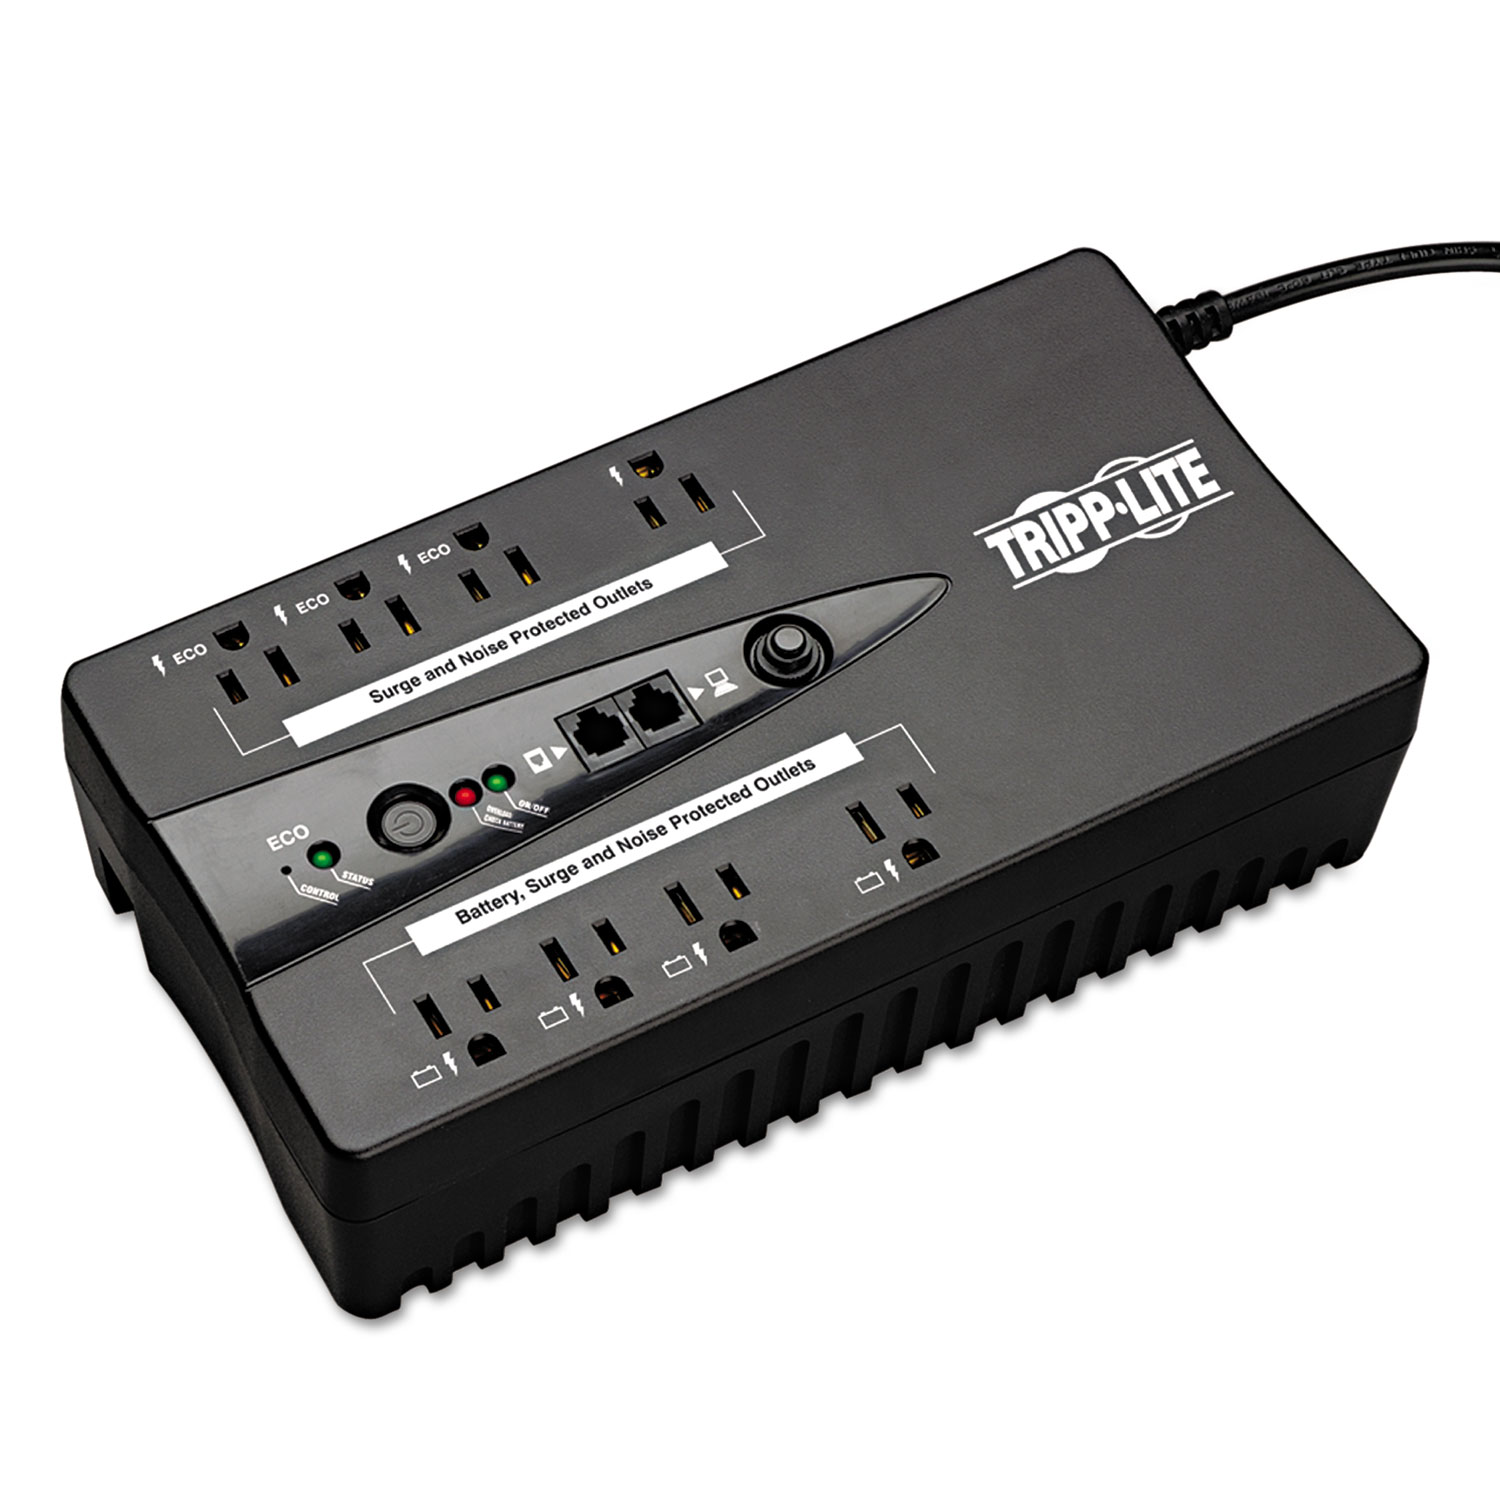  Tripp Lite ECO550UPSTAA ECO Series Energy-Saving Standby UPS with USB Monitoring, 8 Outlets, 550VA, 420J (TRPECO550UPSTAA) 